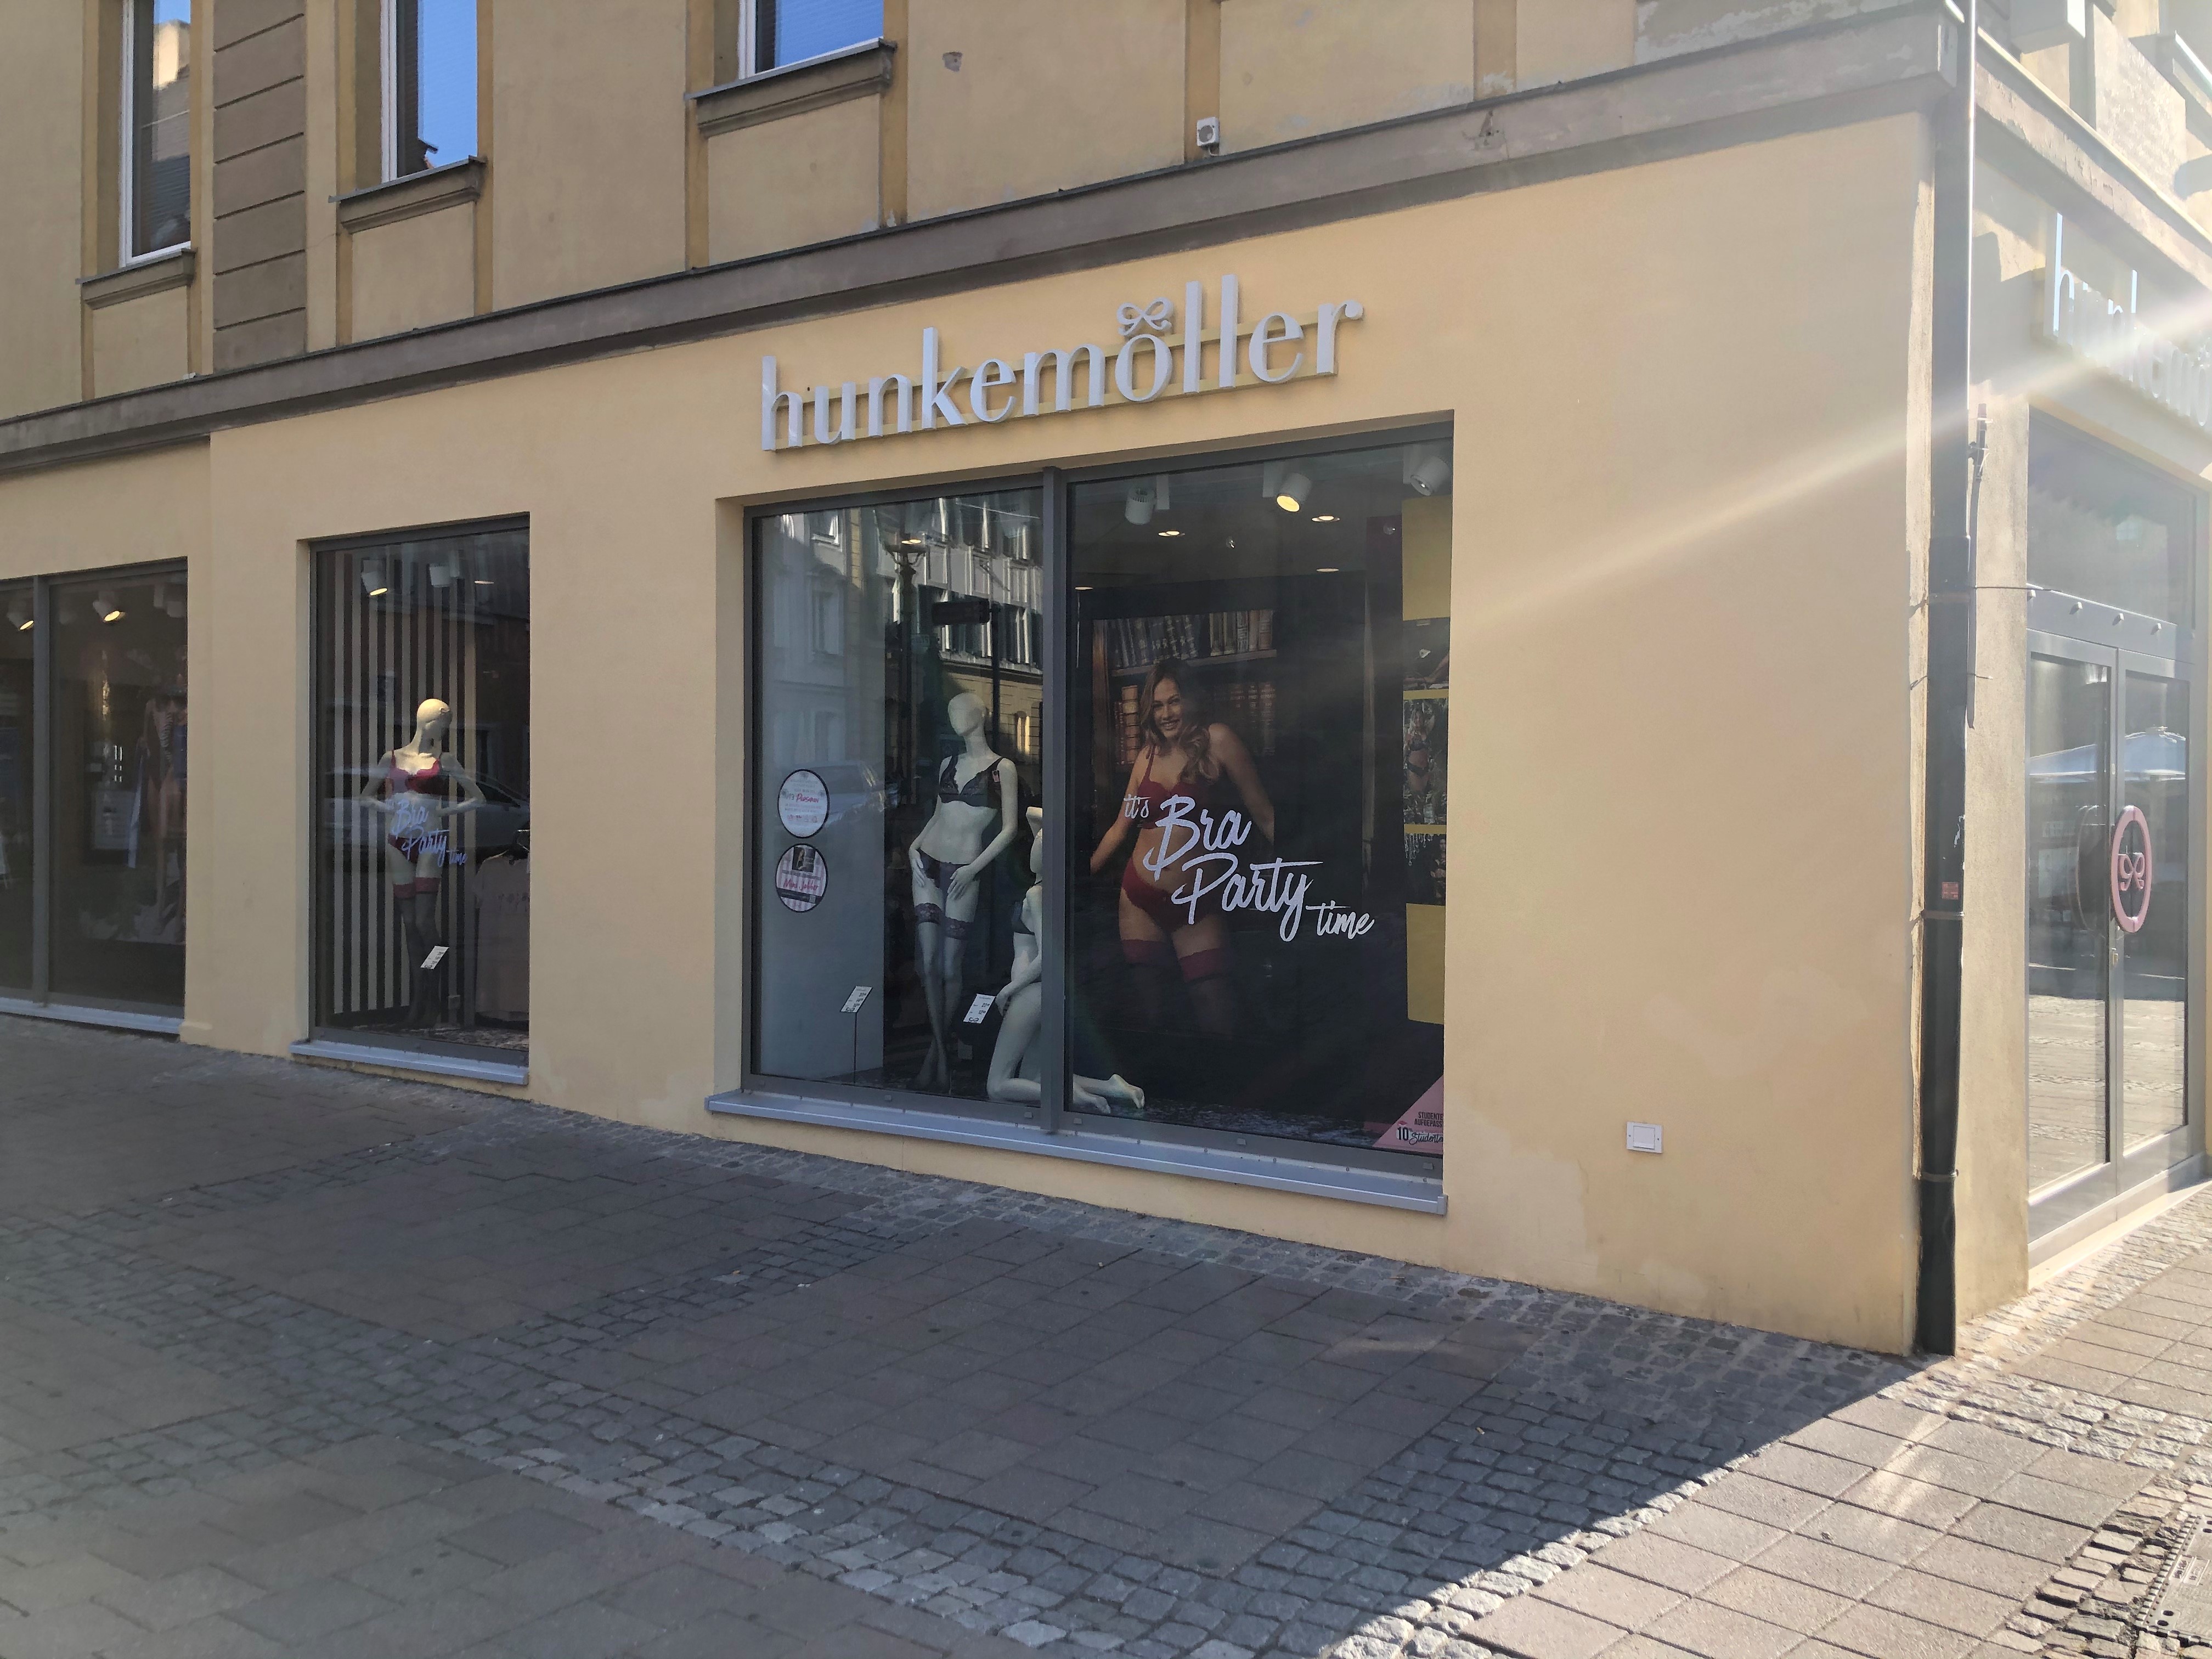 Hunkemöller, Martin Luther Platz 12-14 in Ansbach